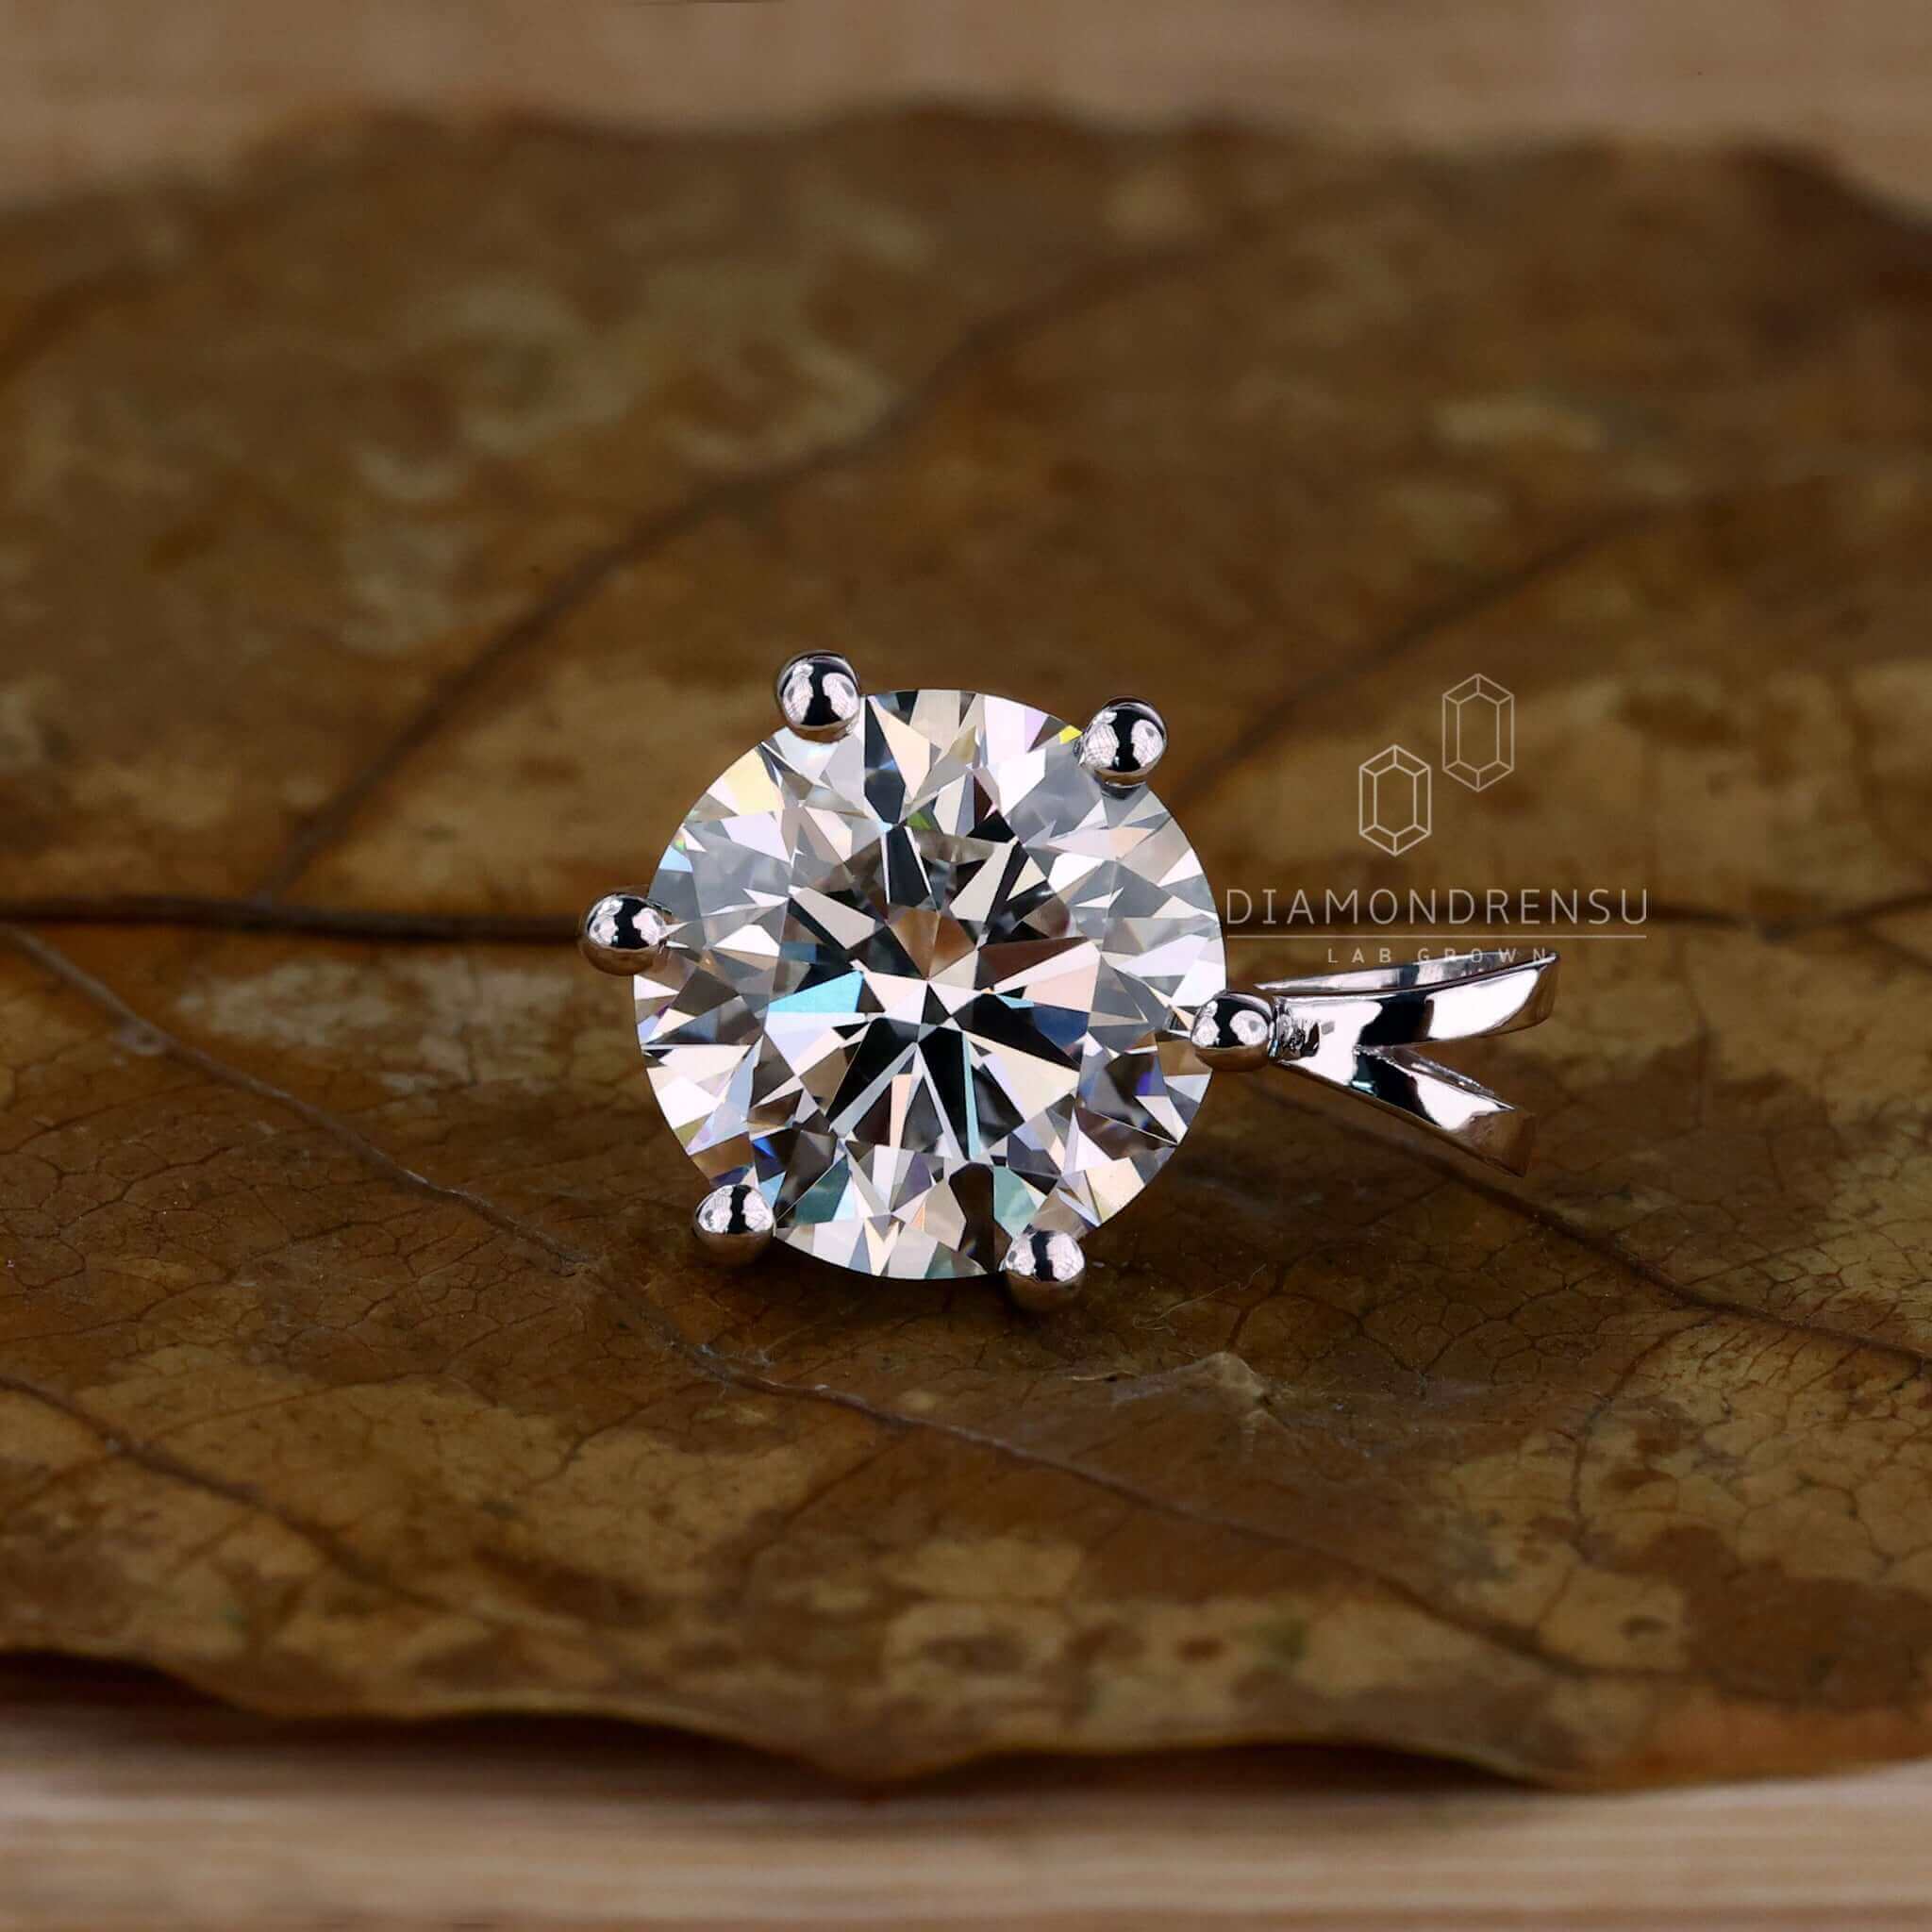 2 carat round diamond pendant